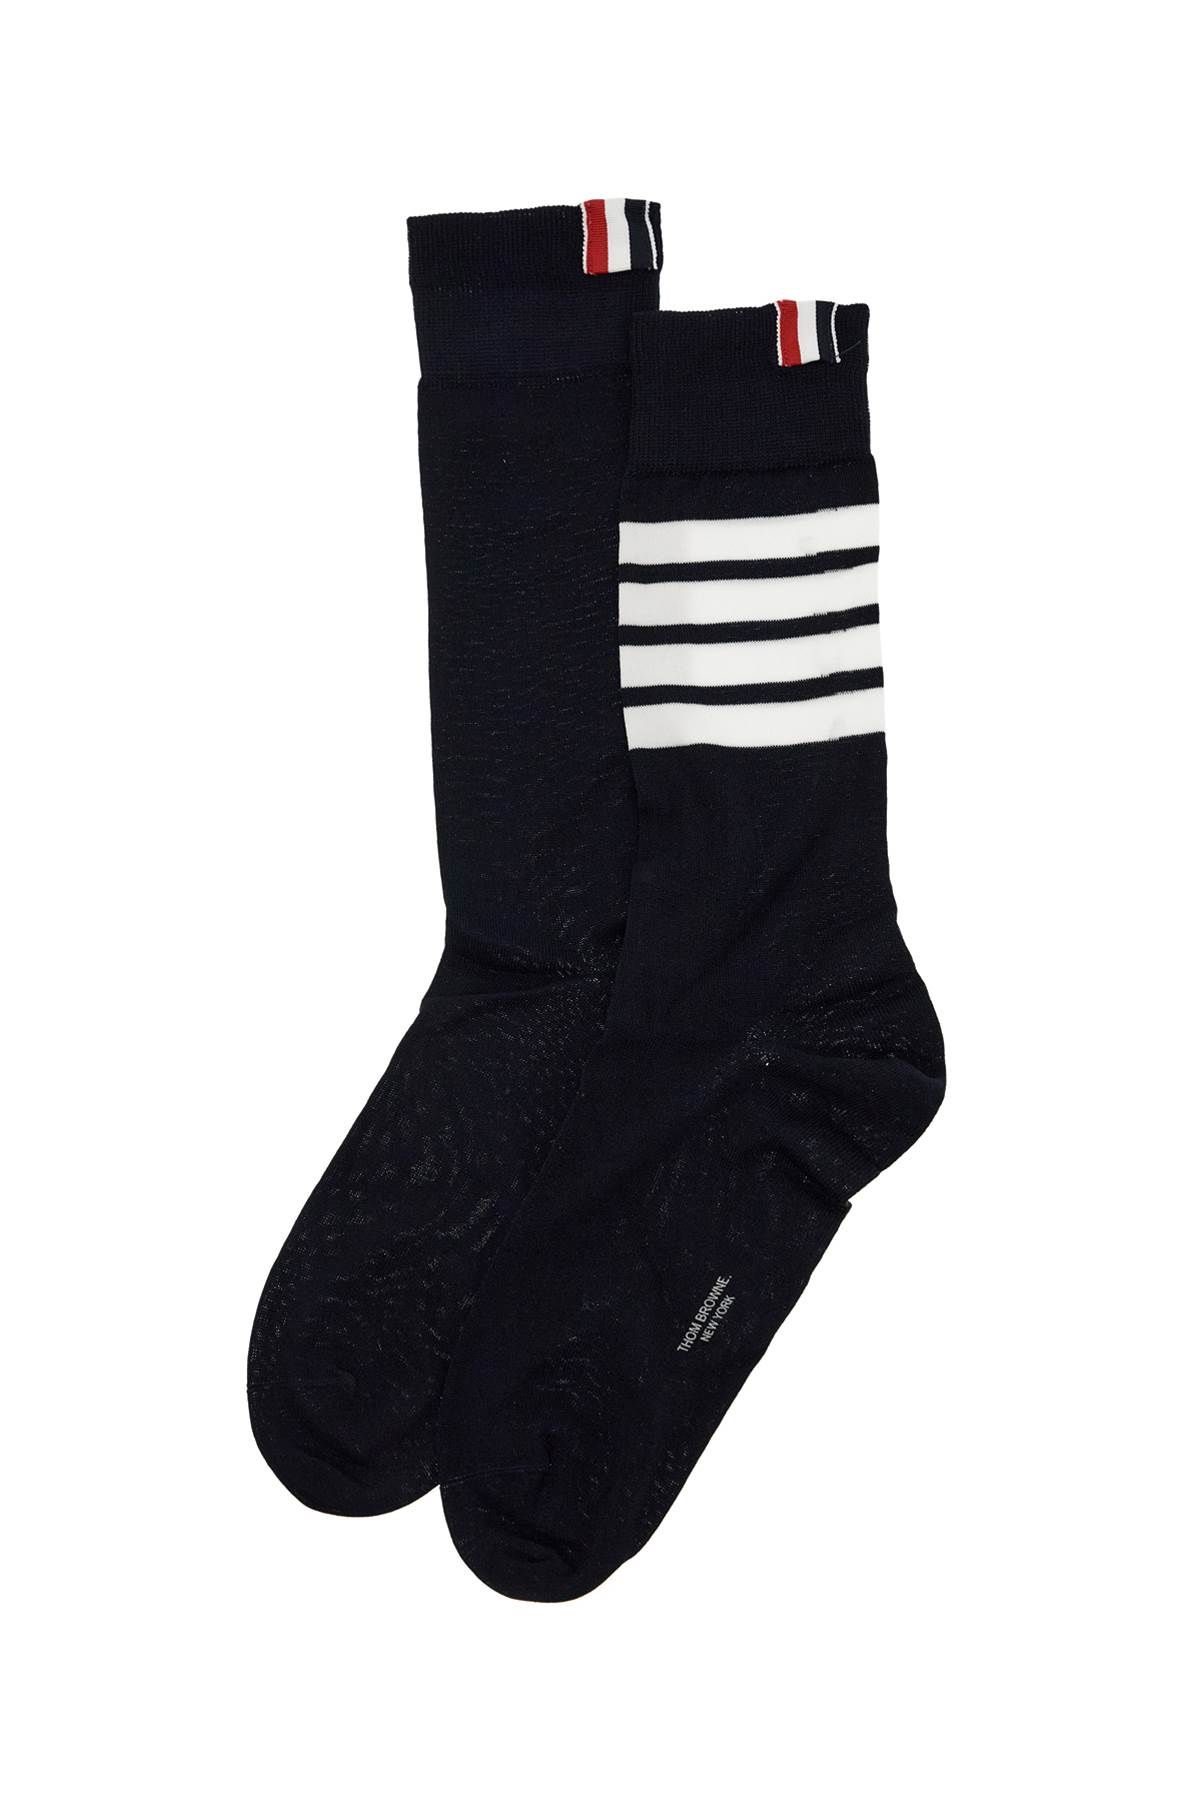 Thom Browne THOM BROWNE long 4-bar lightweight cotton socks